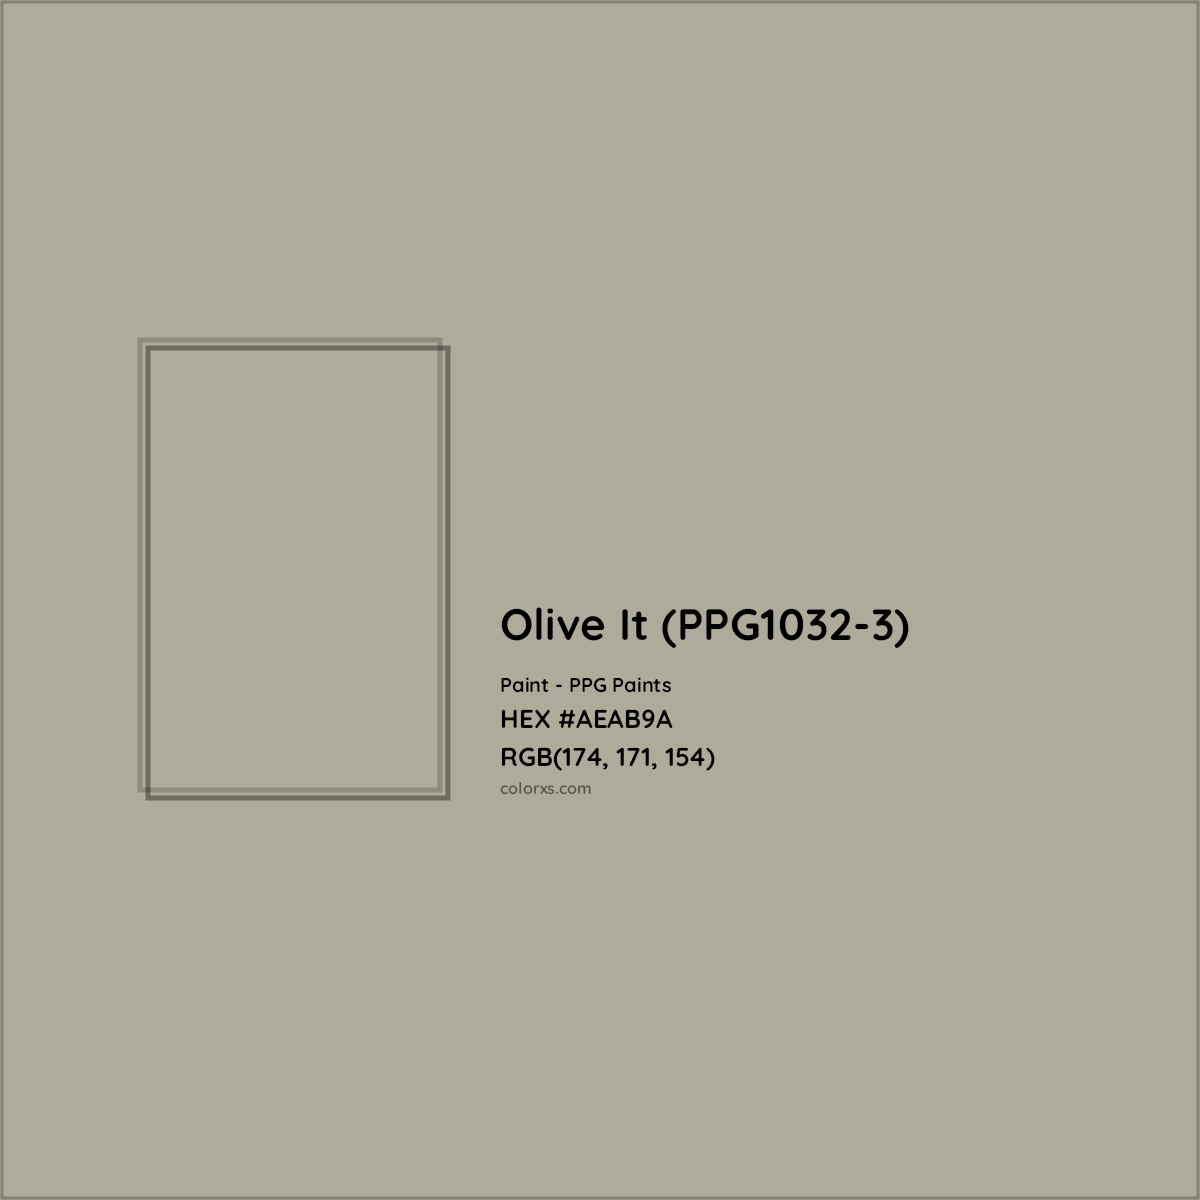 HEX #AEAB9A Olive It (PPG1032-3) Paint PPG Paints - Color Code